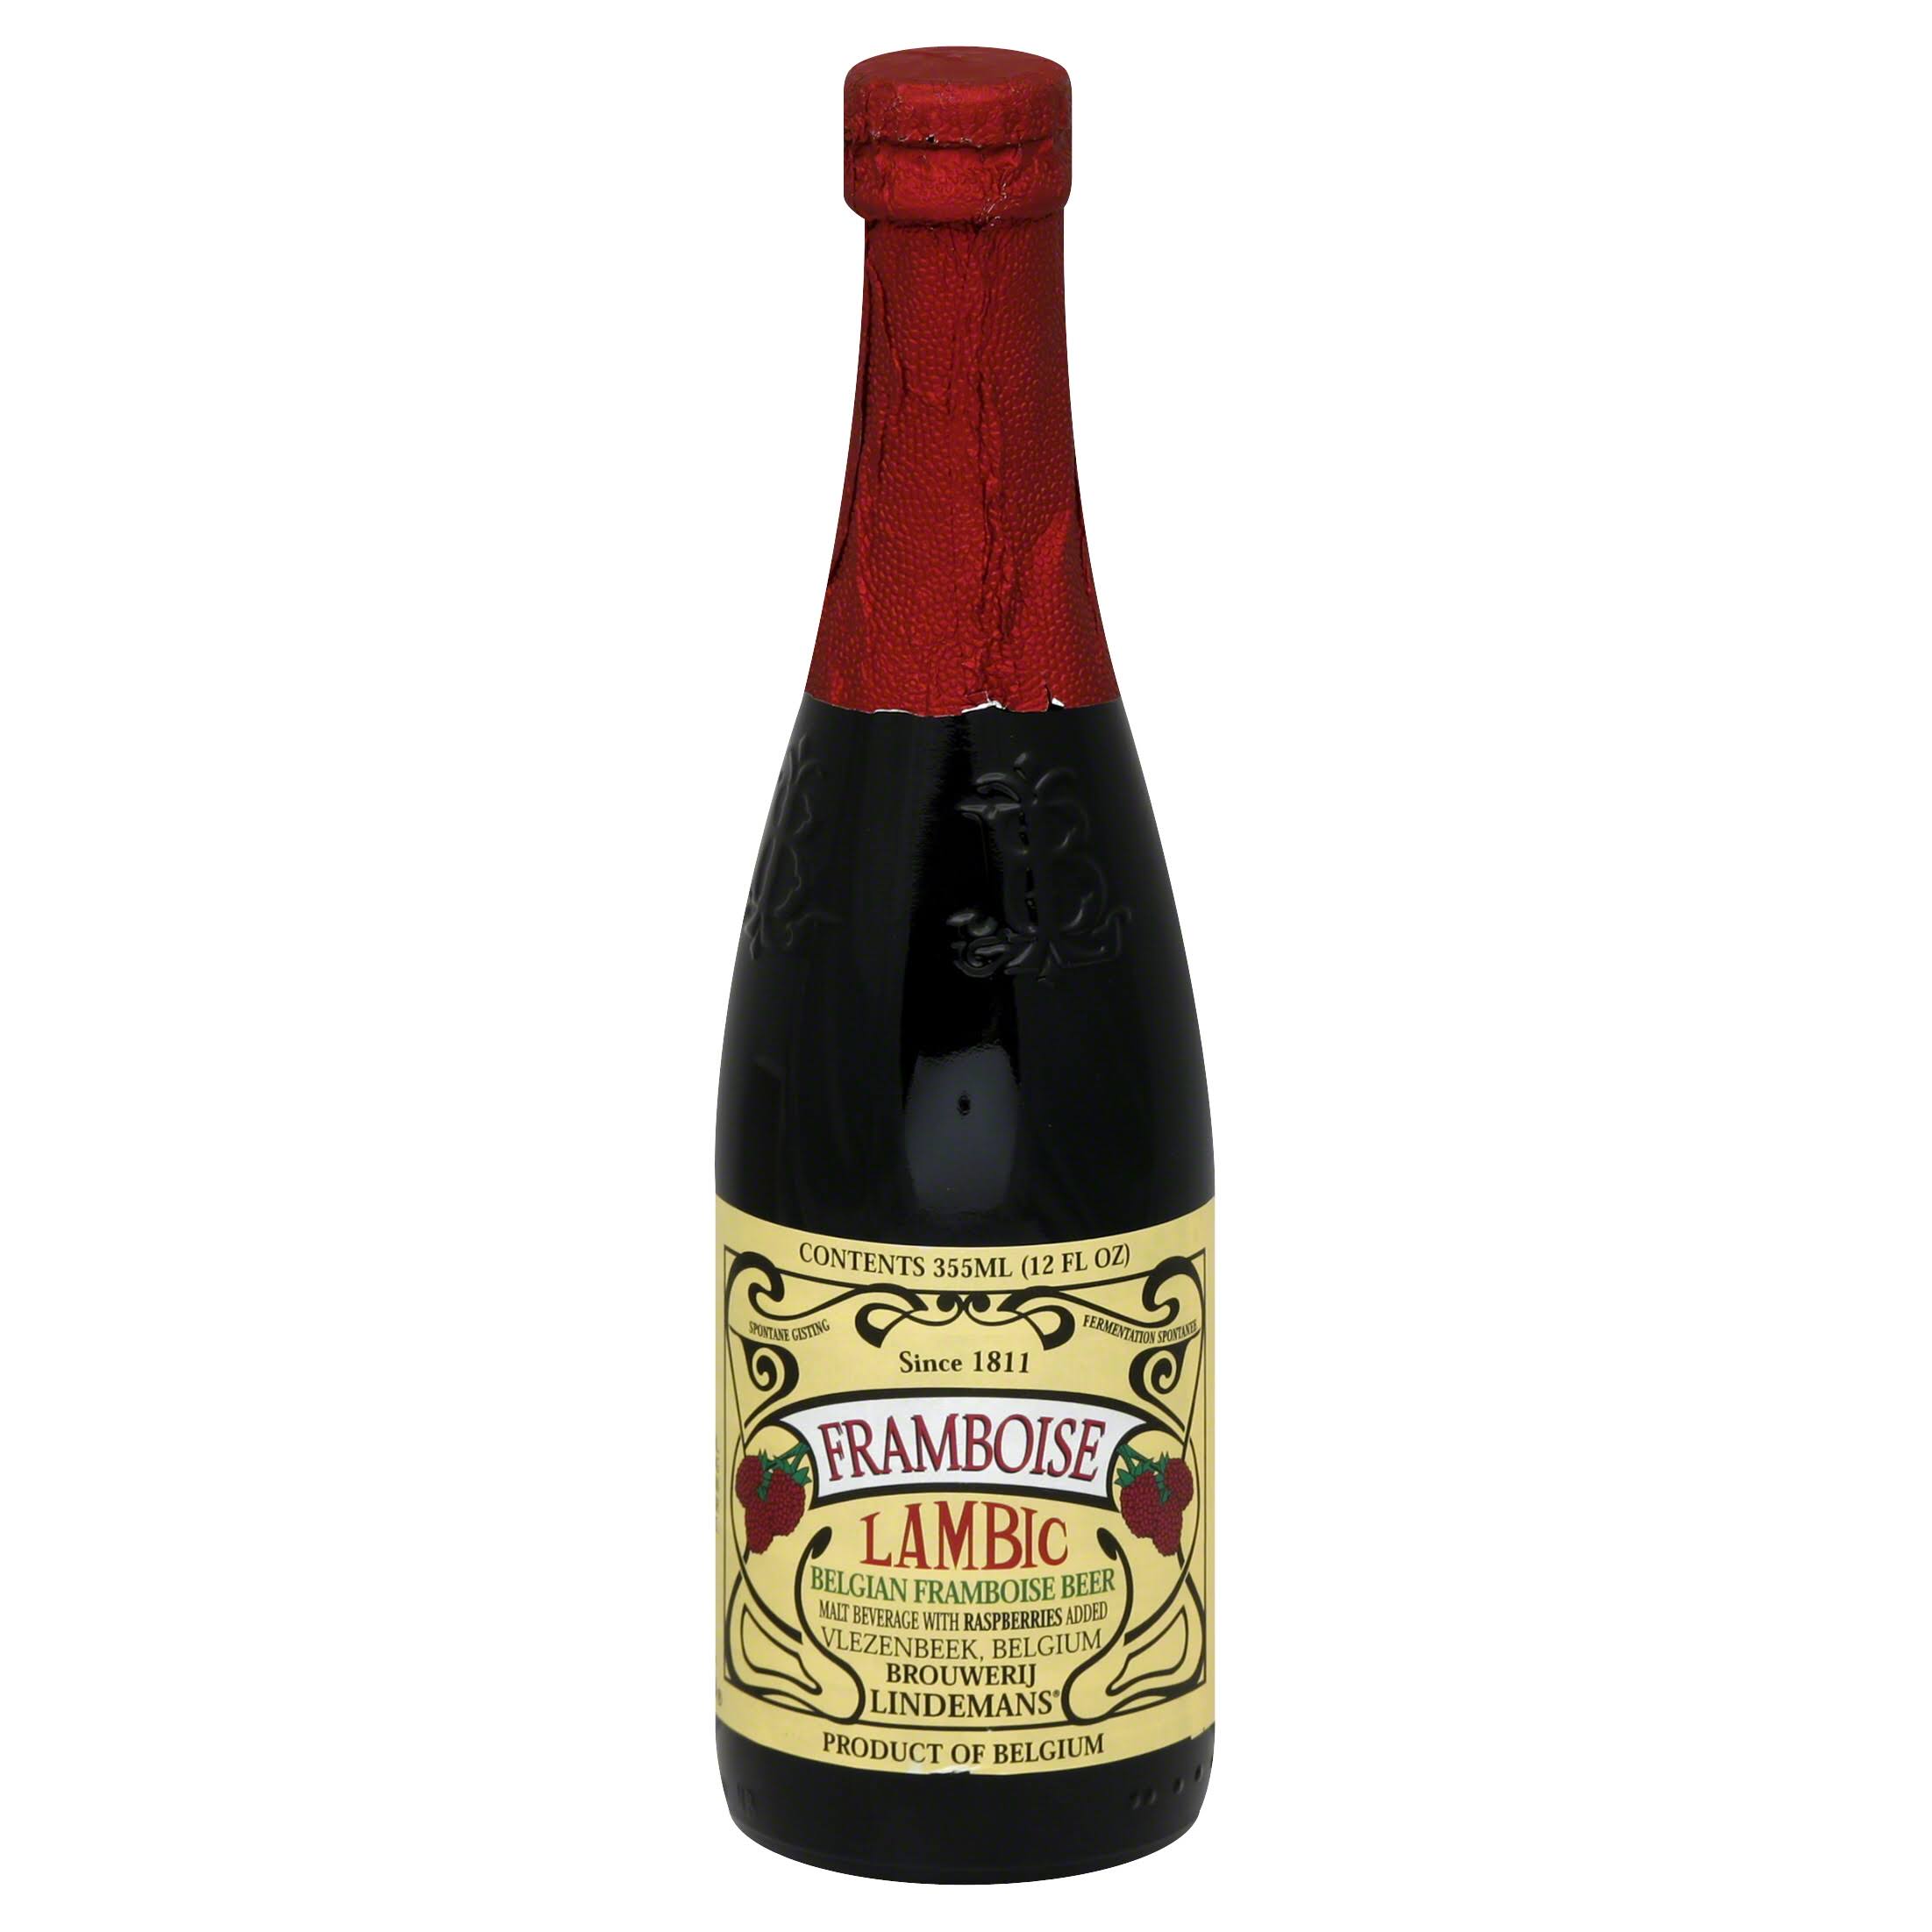 Lindemans Framboise Lambic Belgian Raspberry Beer - 12 fl oz bottle